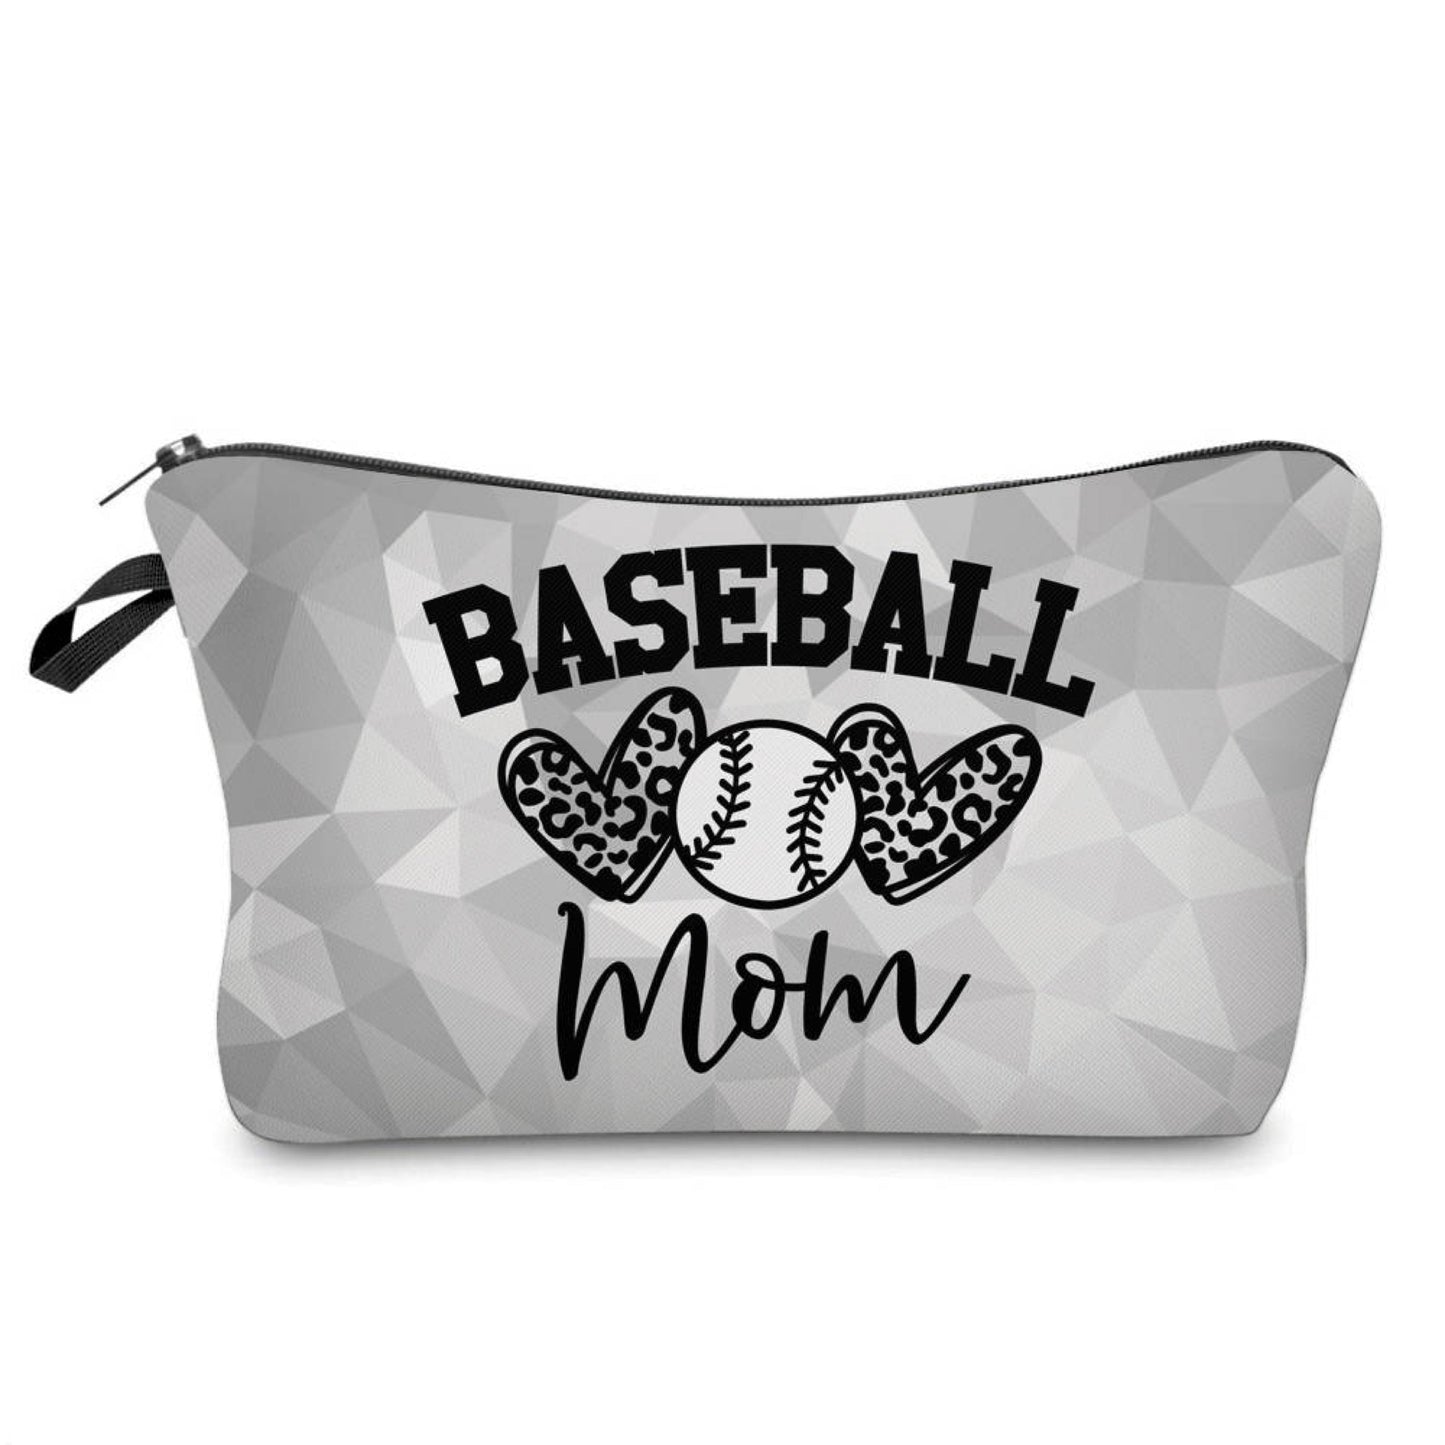 Pouch - Baseball - Mom